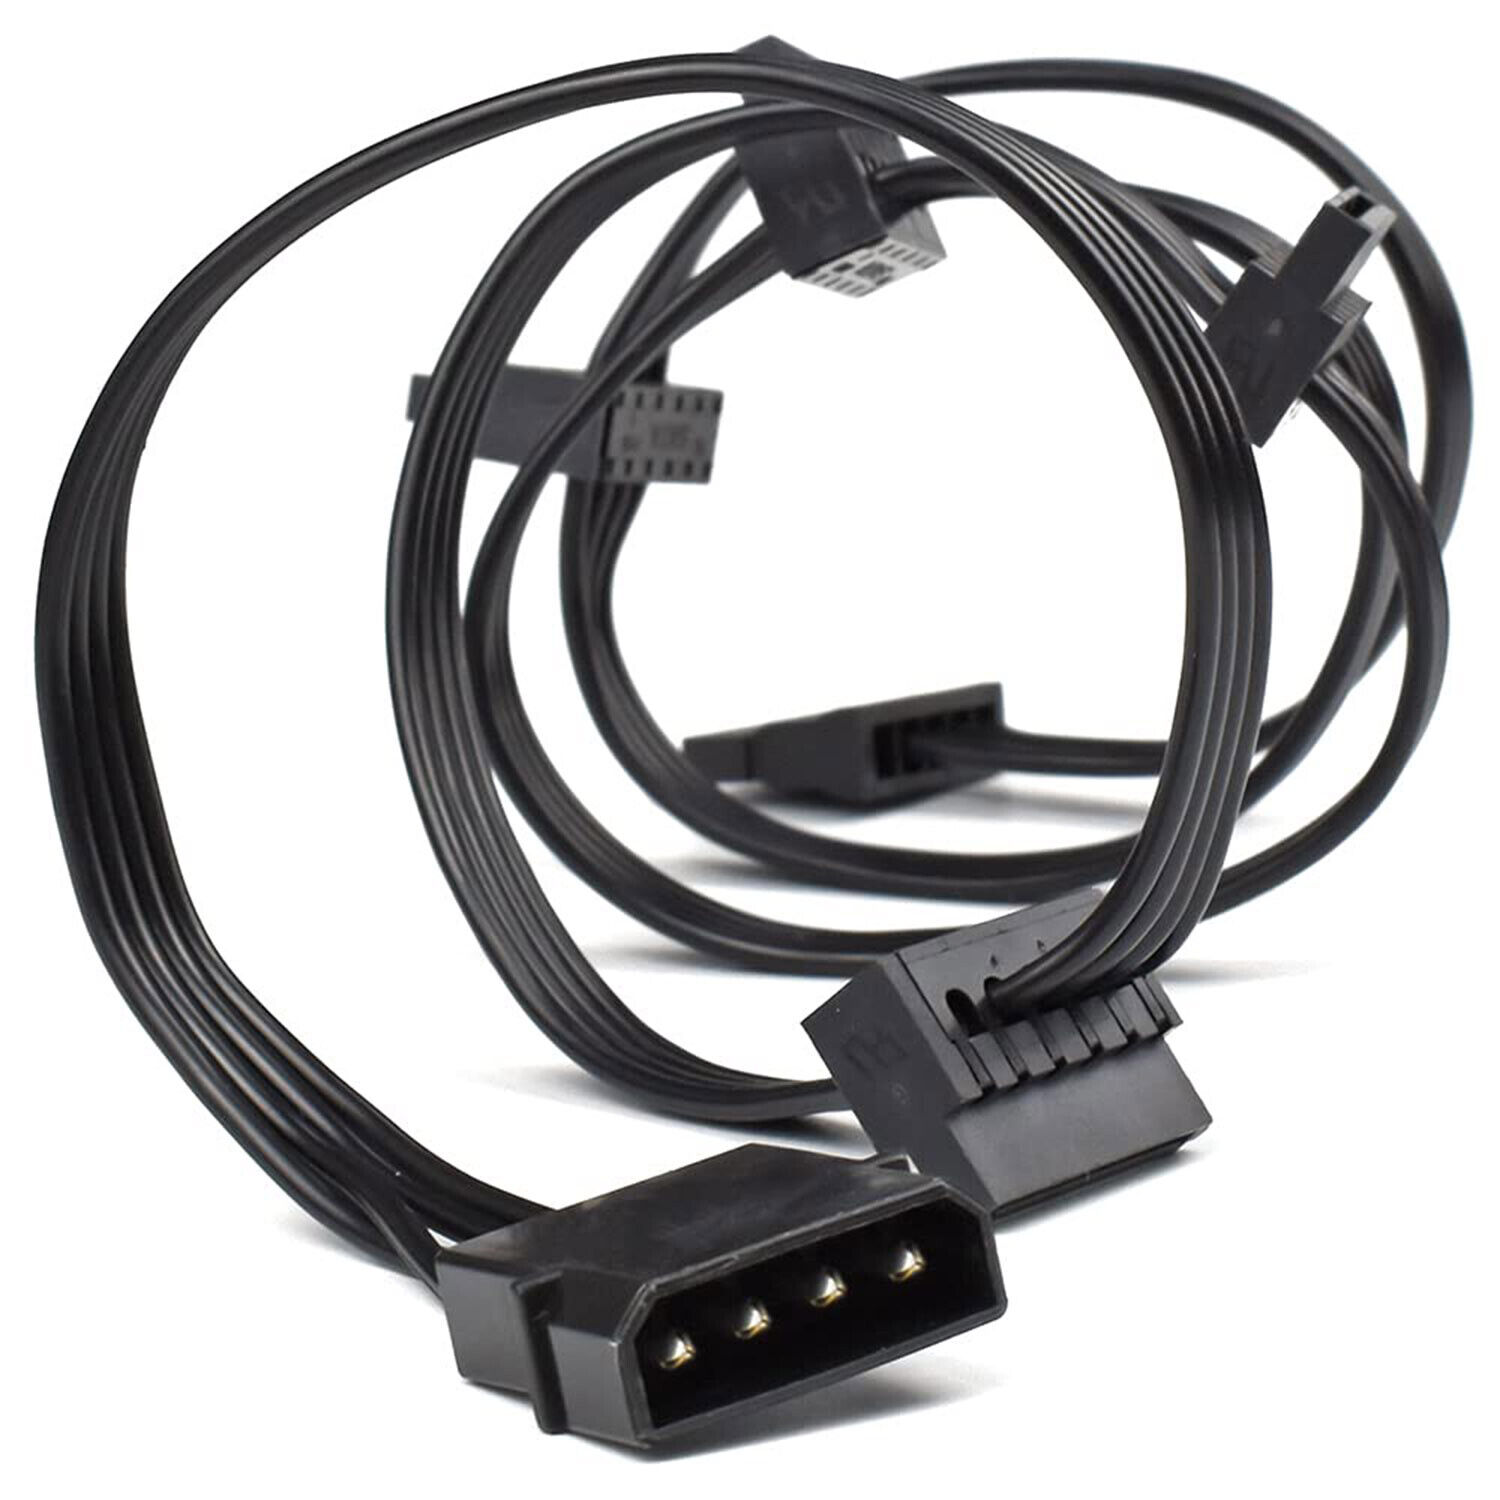 2x 4-Pin IDE Molex Male to 5 SATA 15-Pin Serial ATA Power Splitter Adapter Cable